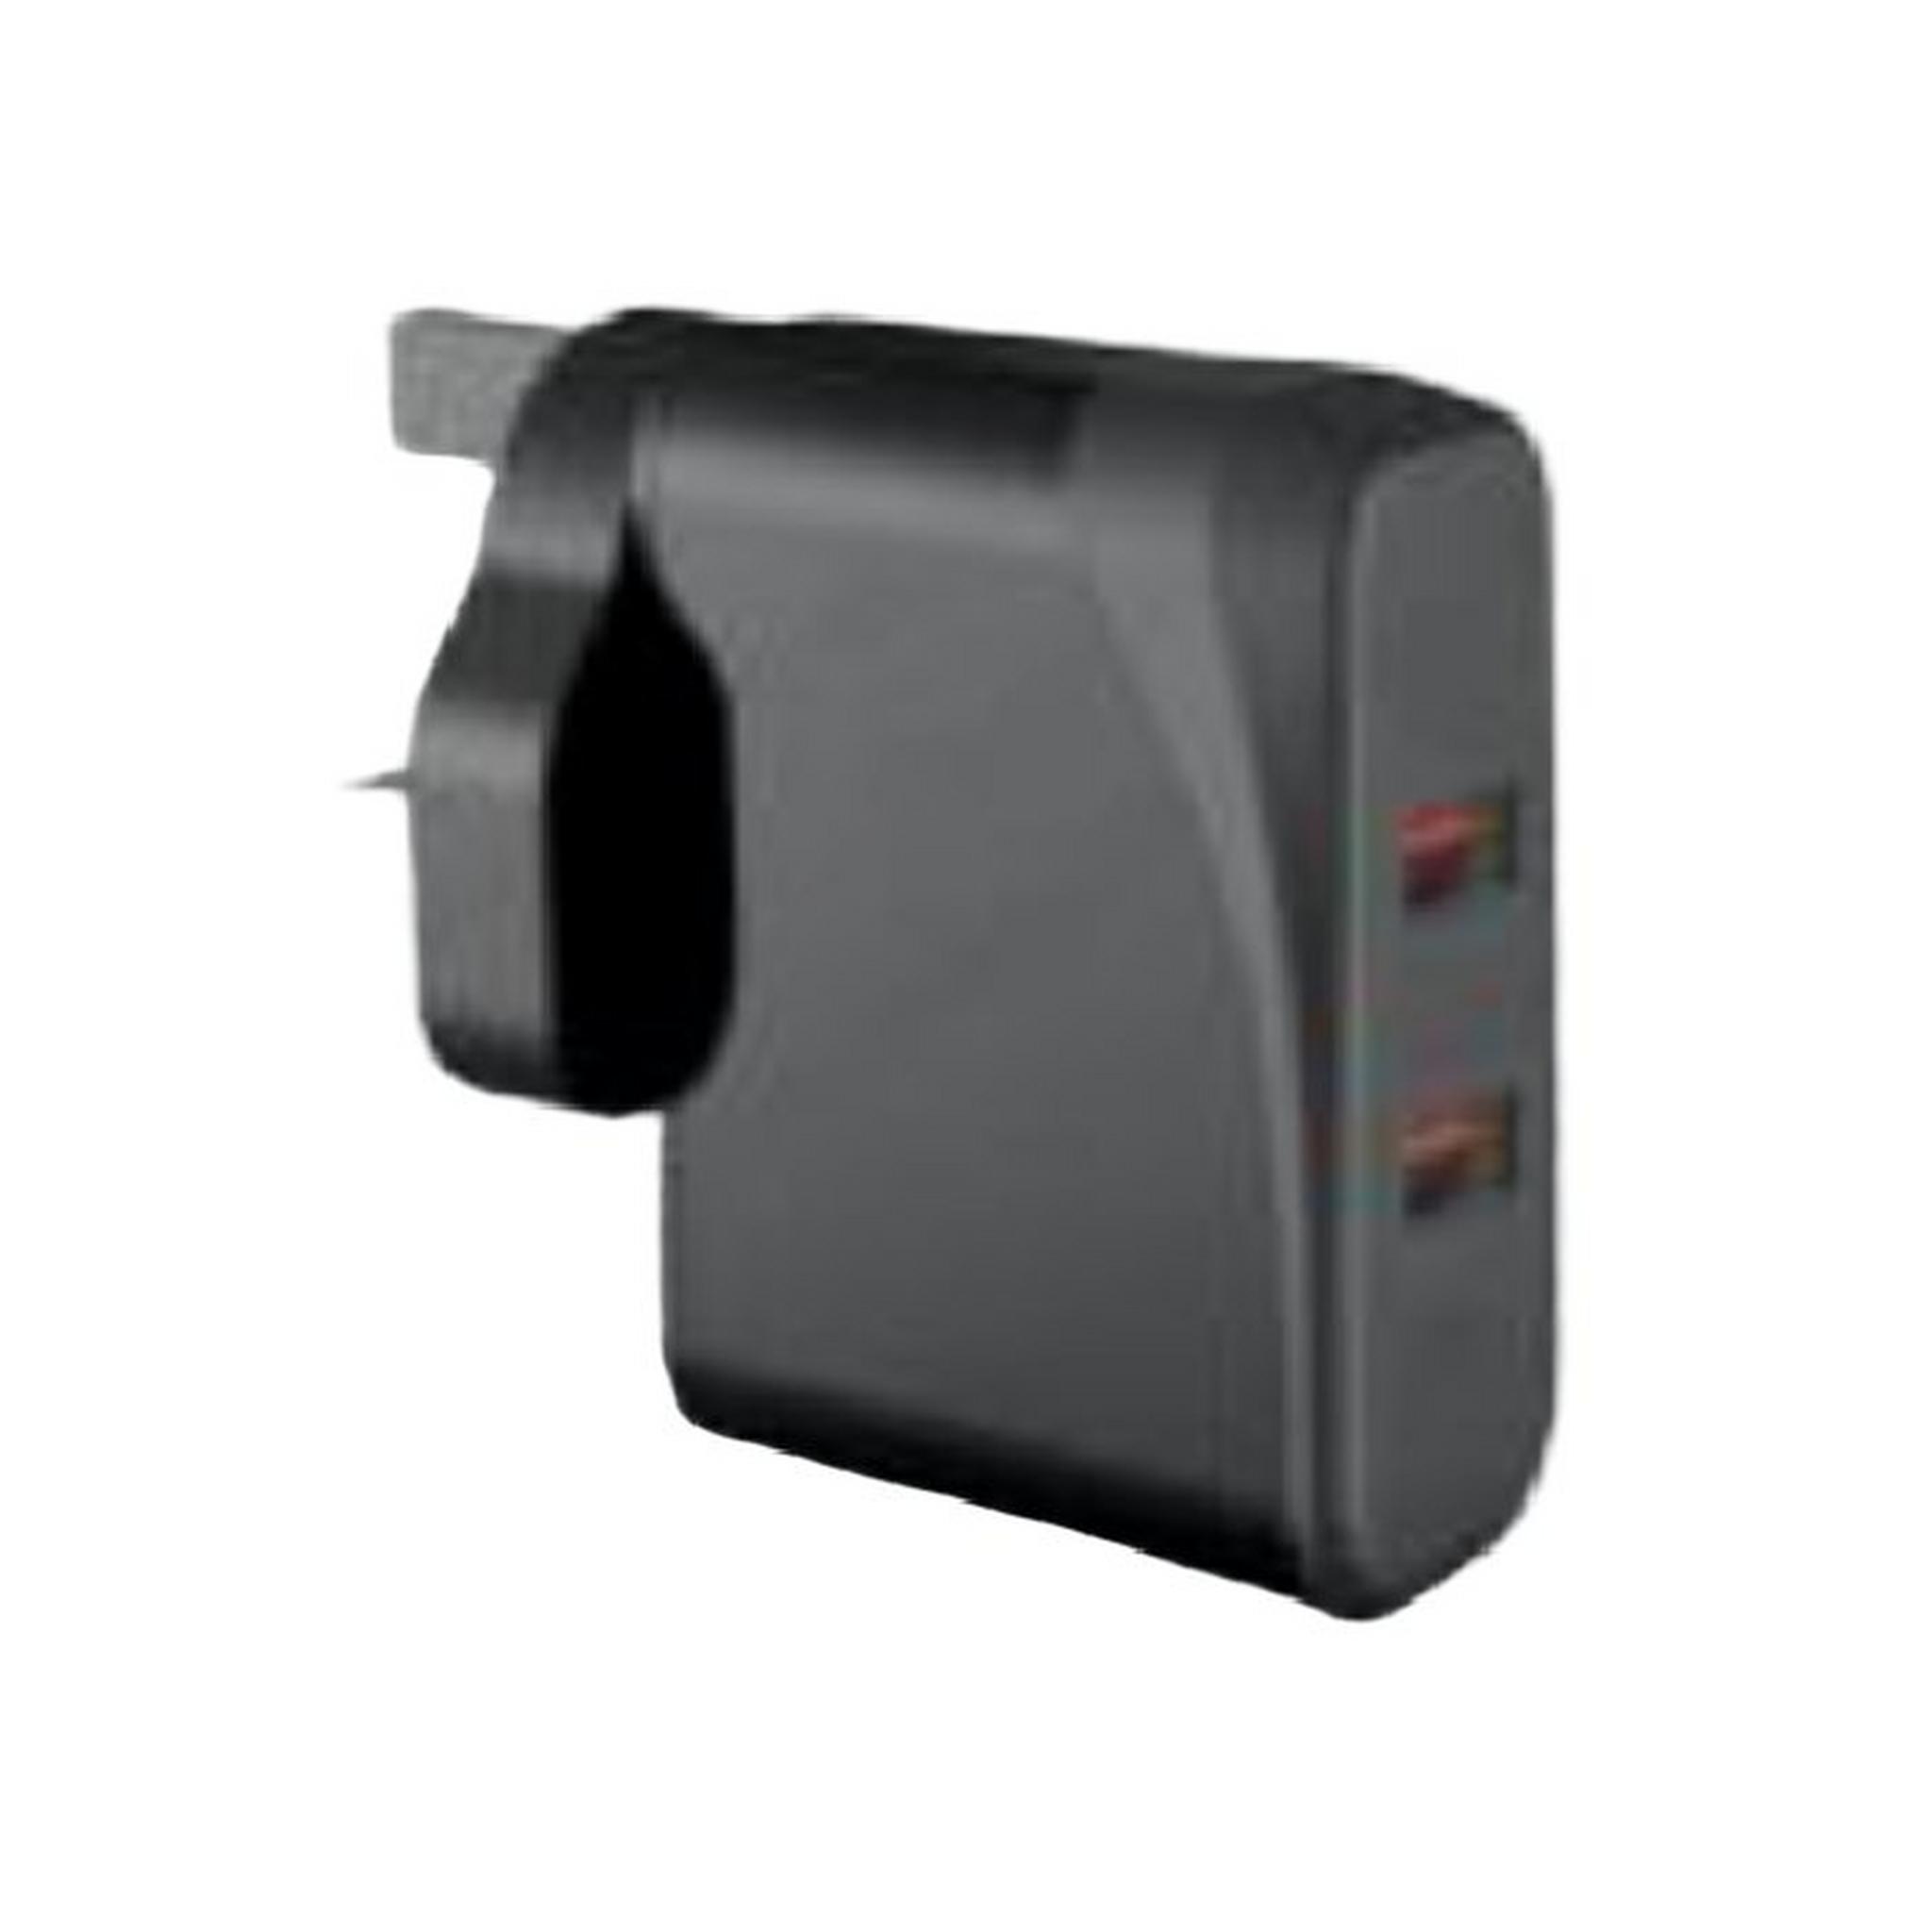 EQ Wall Charger 36W Dual USB Port - Black